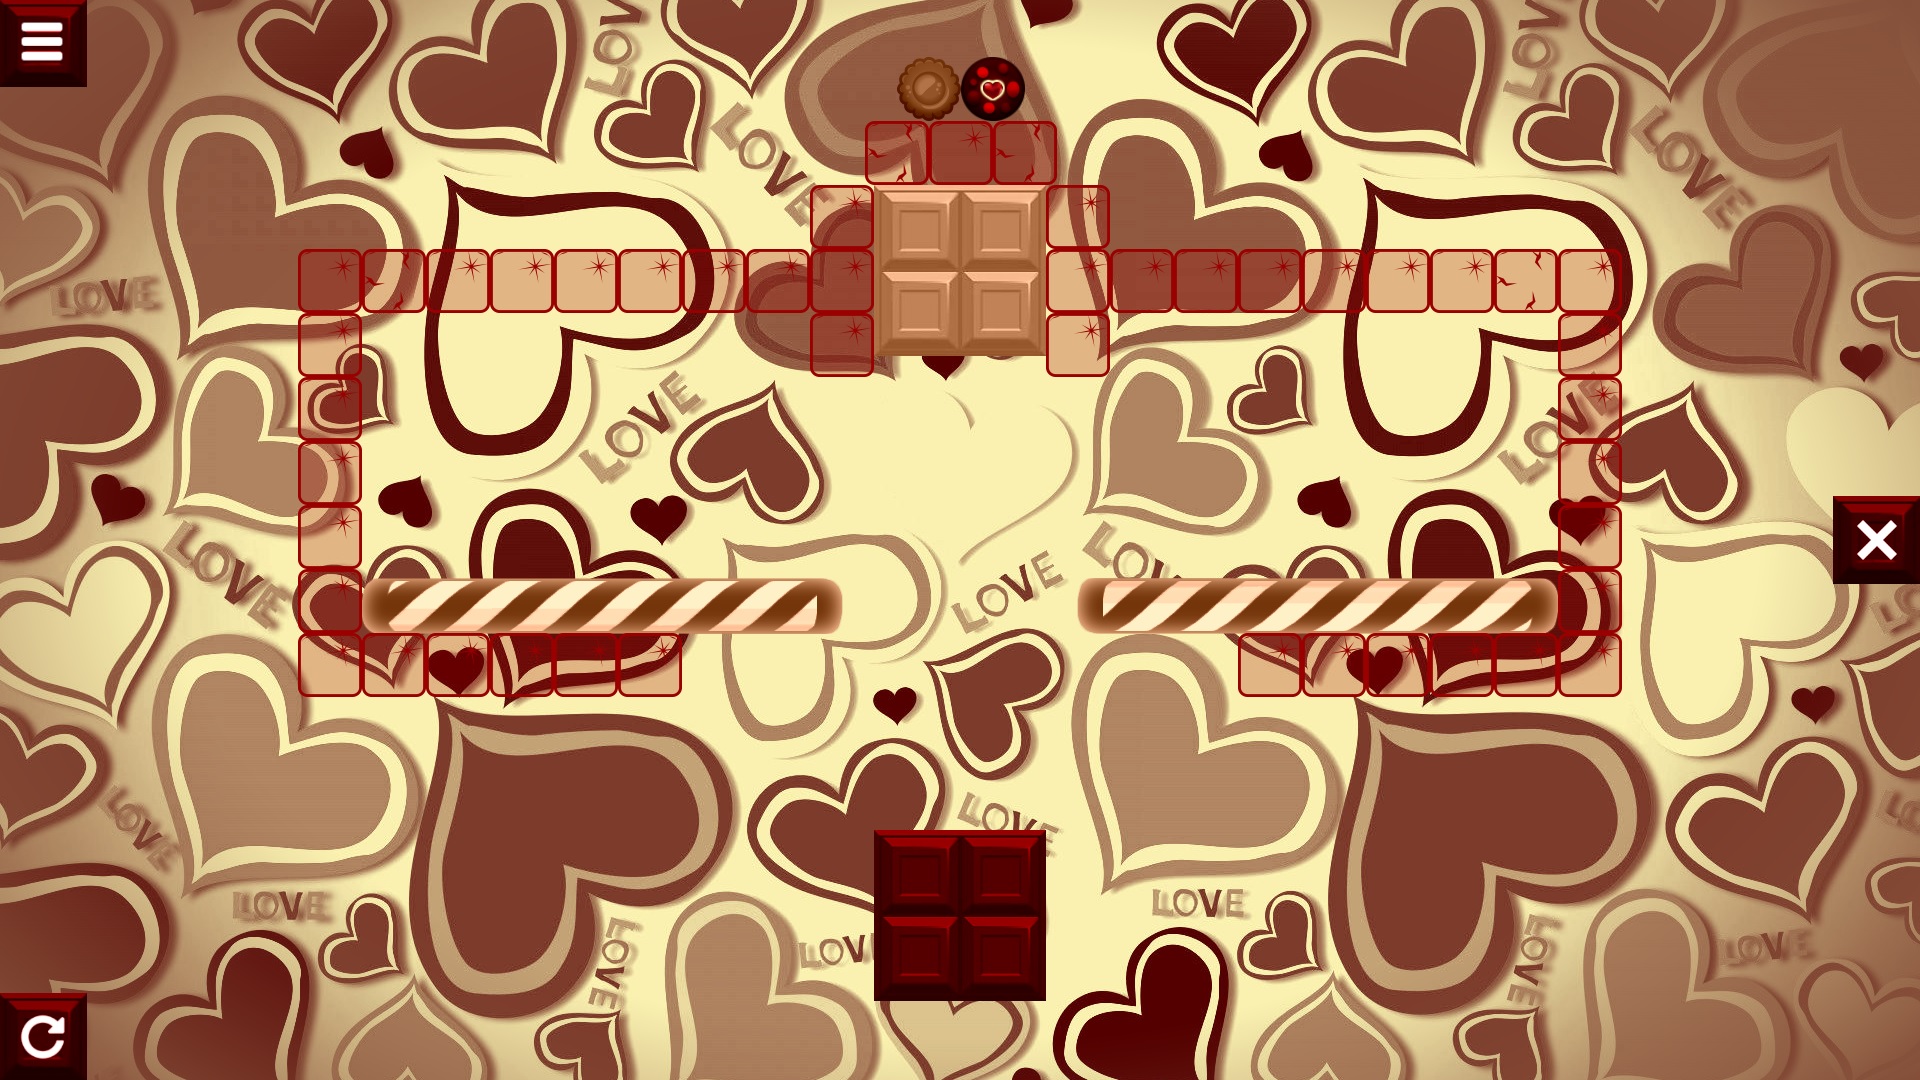 Chocolate makes you happy: Valentine's Day screenshot